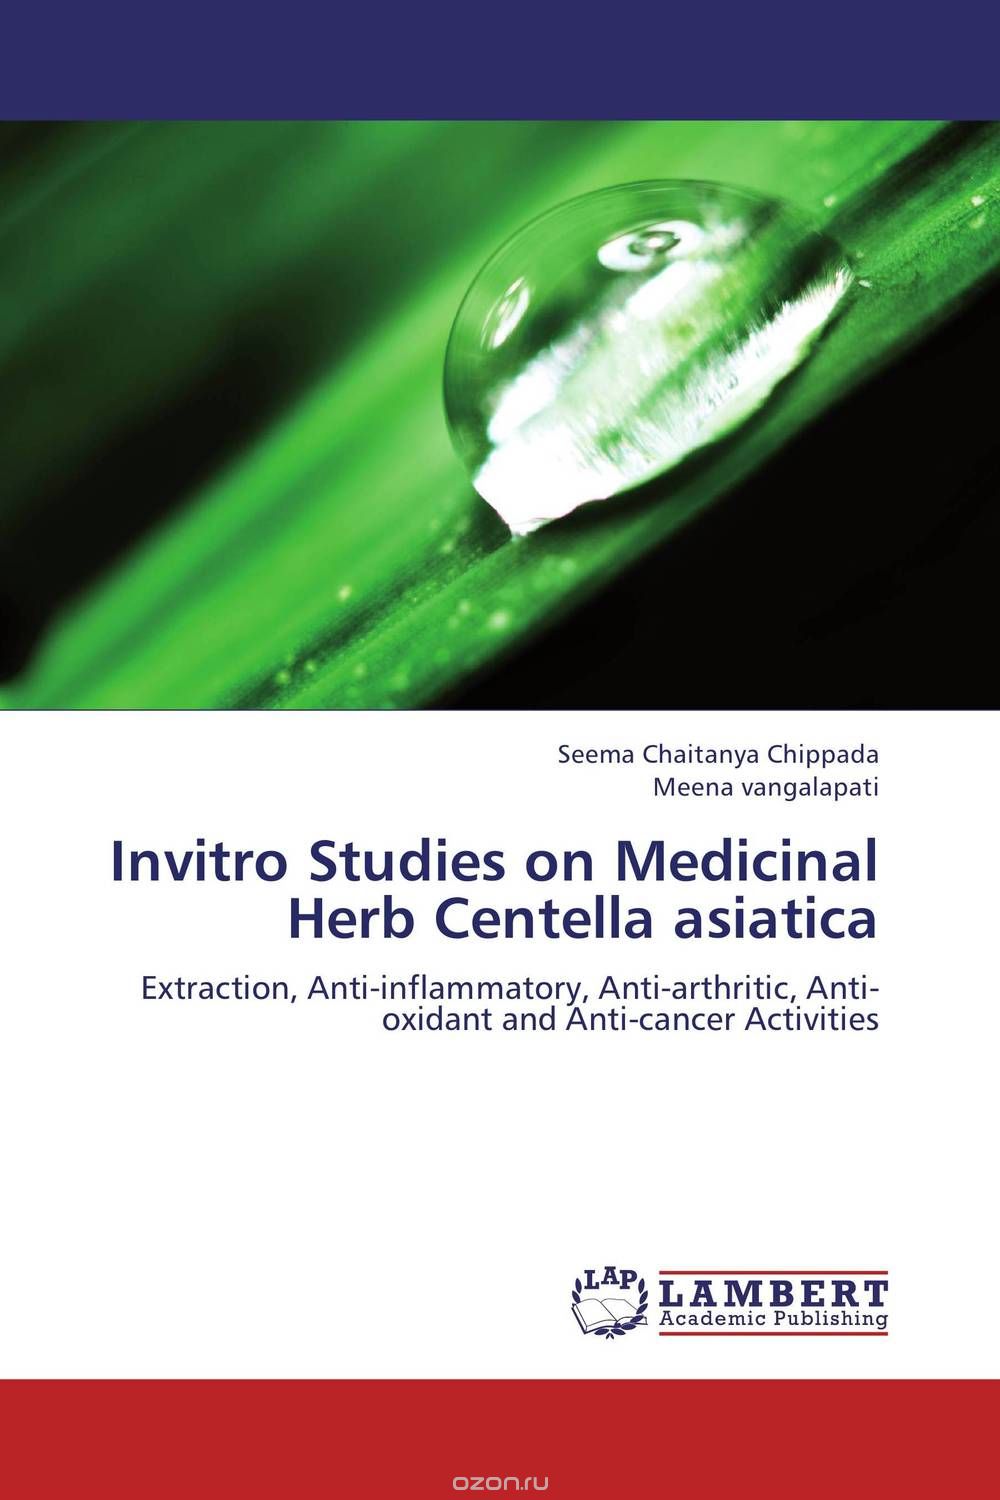 Скачать книгу "Invitro Studies on Medicinal Herb Centella asiatica"